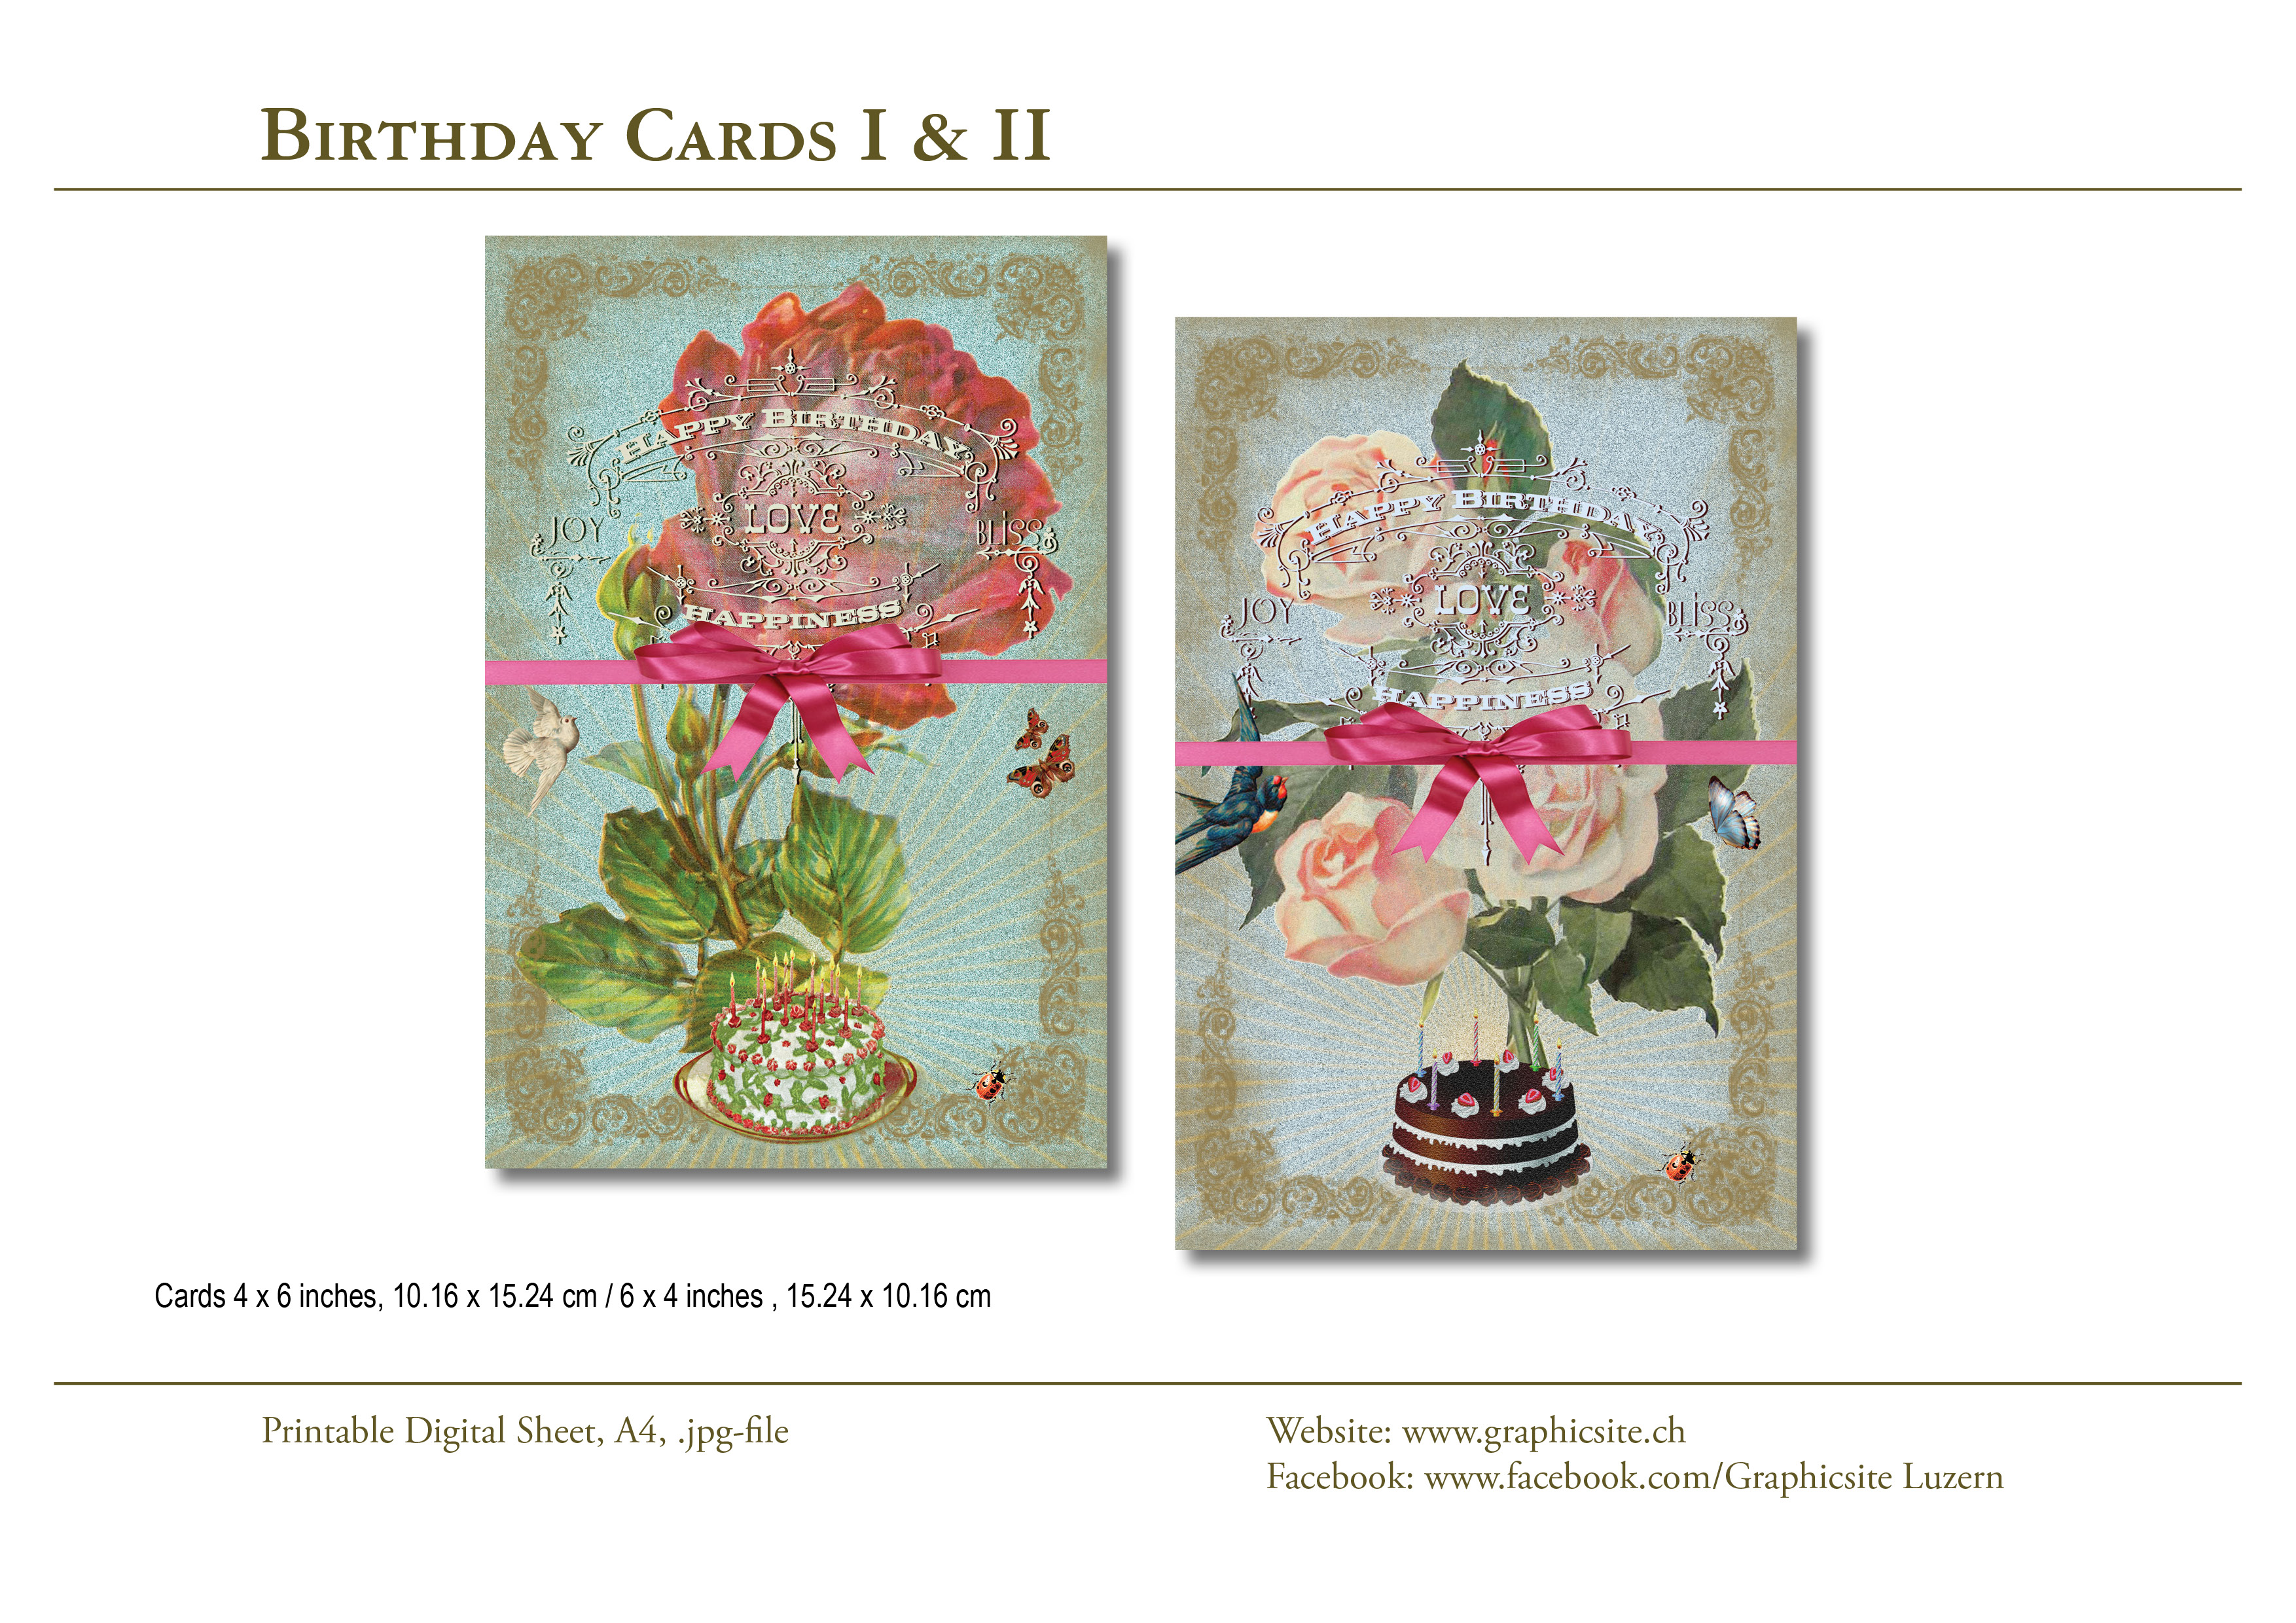 Printable Digital Sheets - 6 x 4 images - Birthday 1 & 2